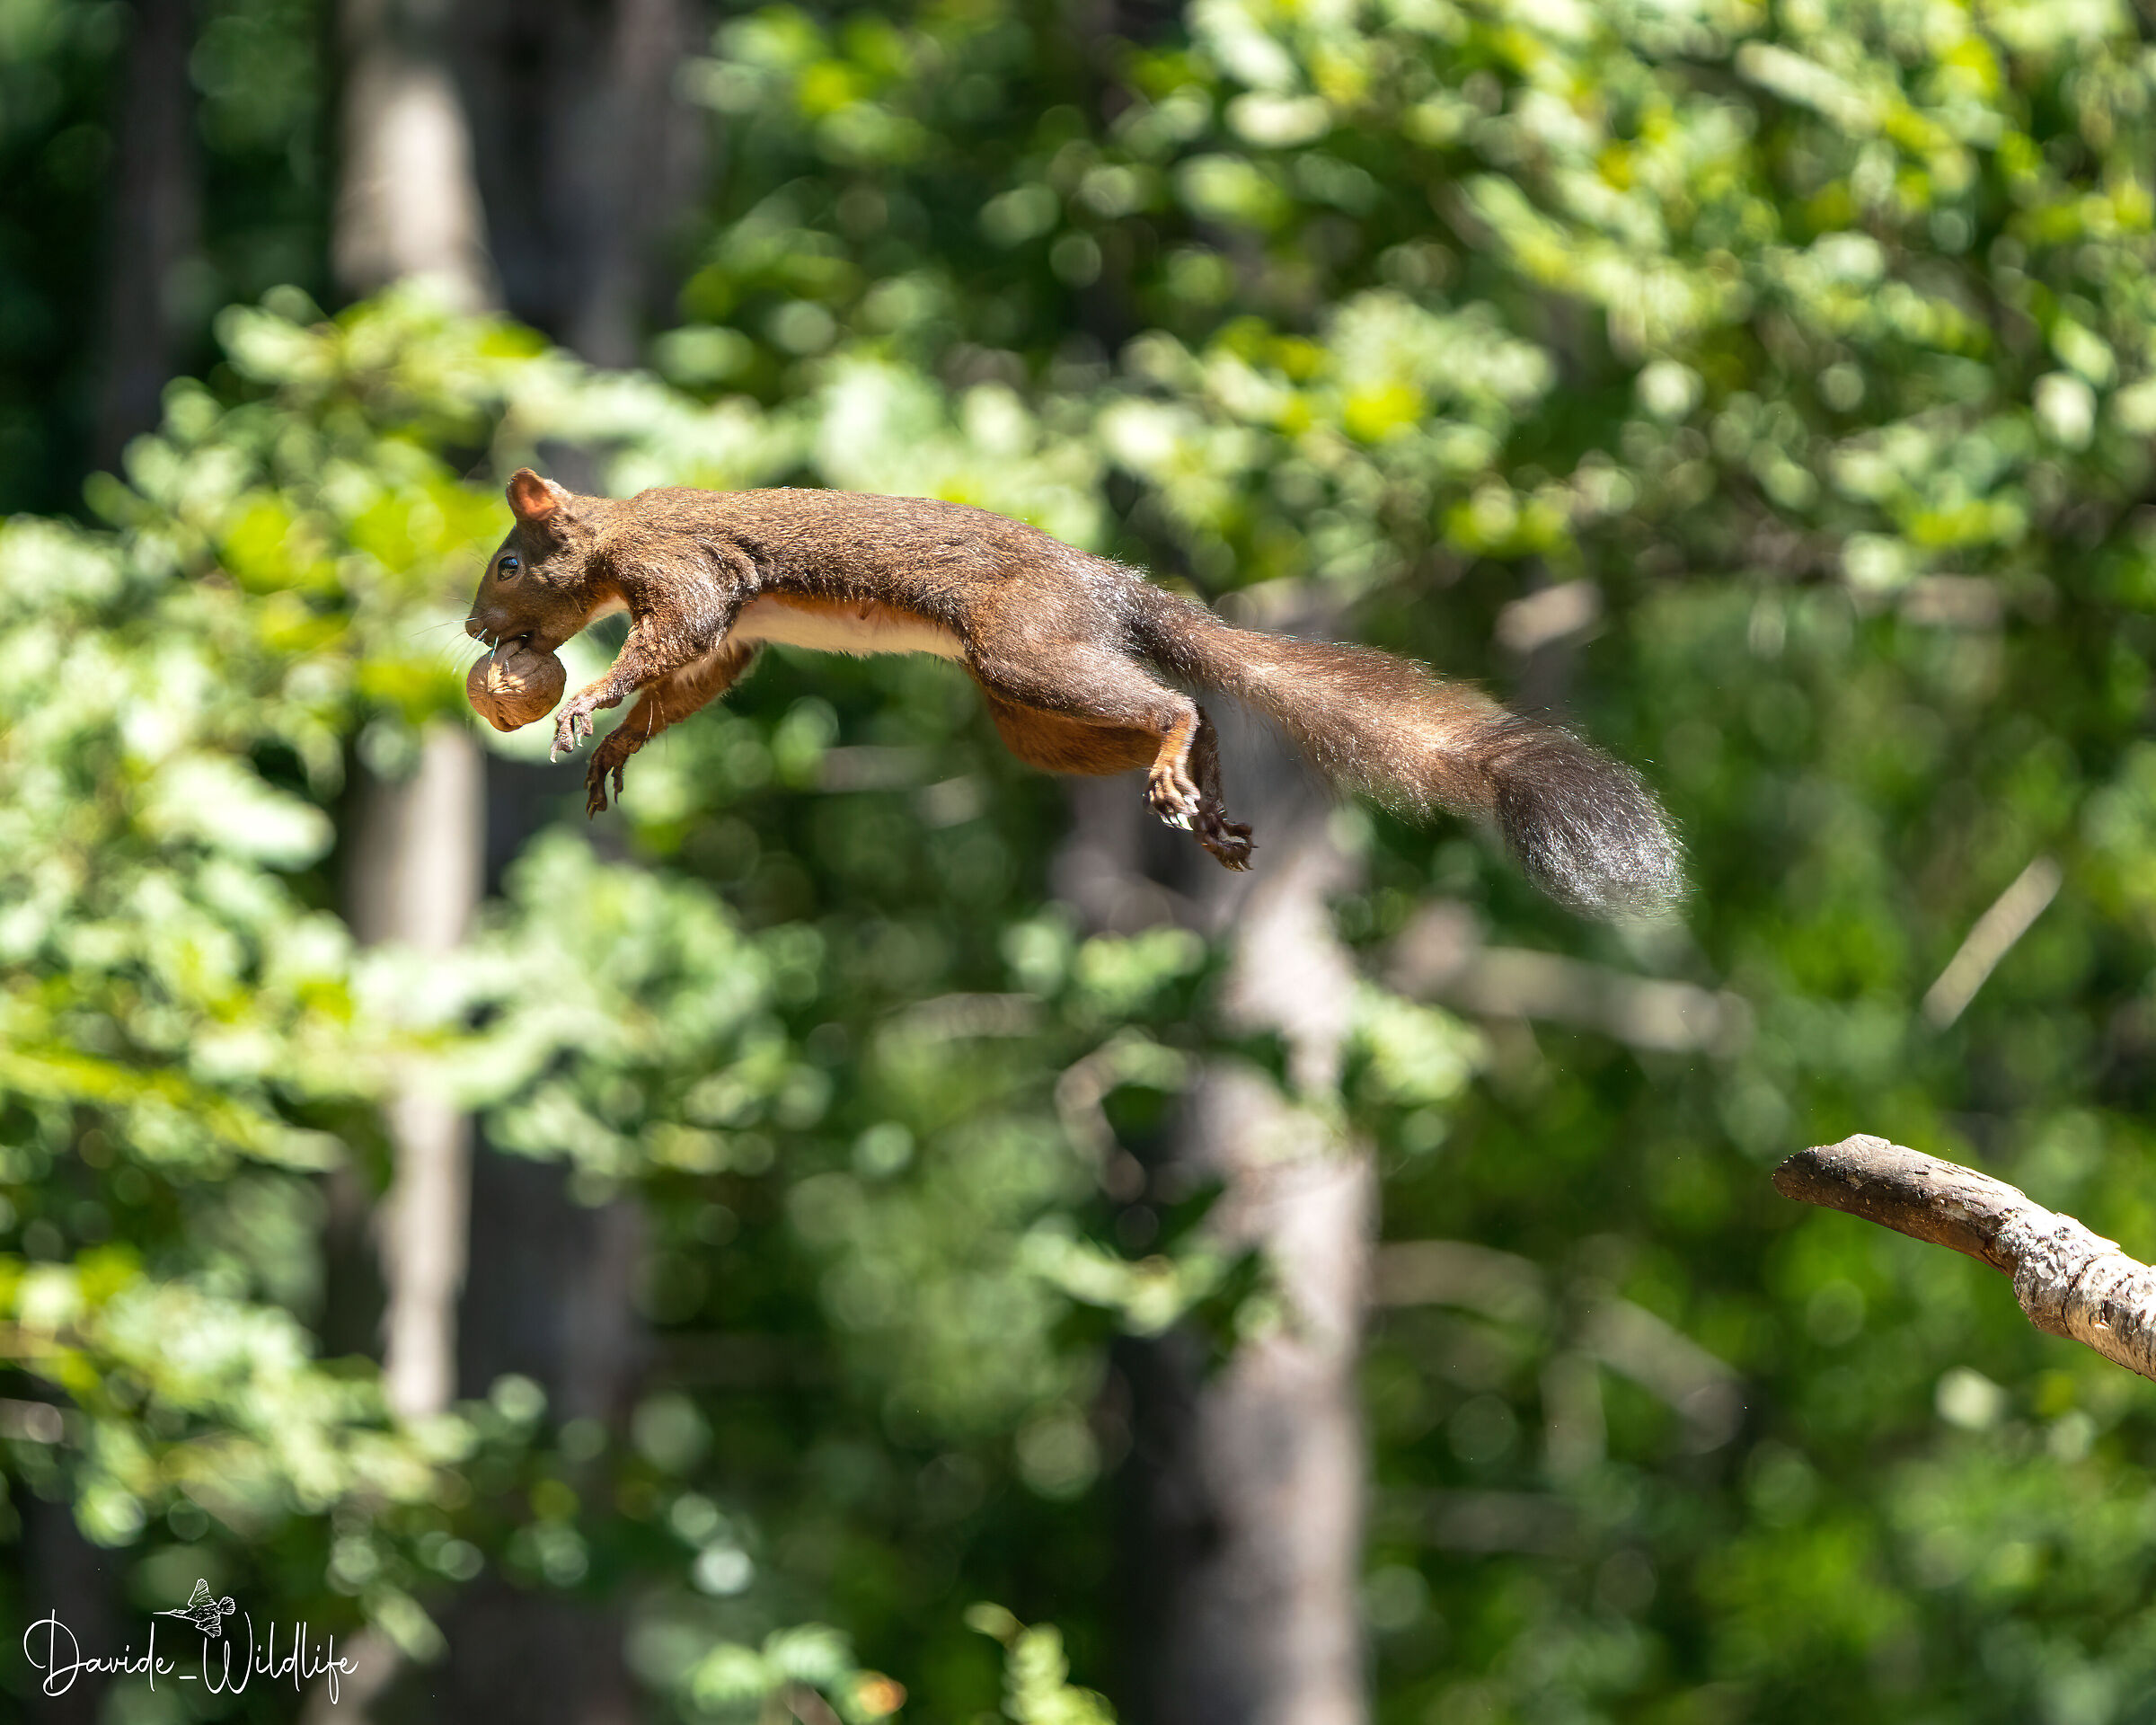 Red squirrel in flight...